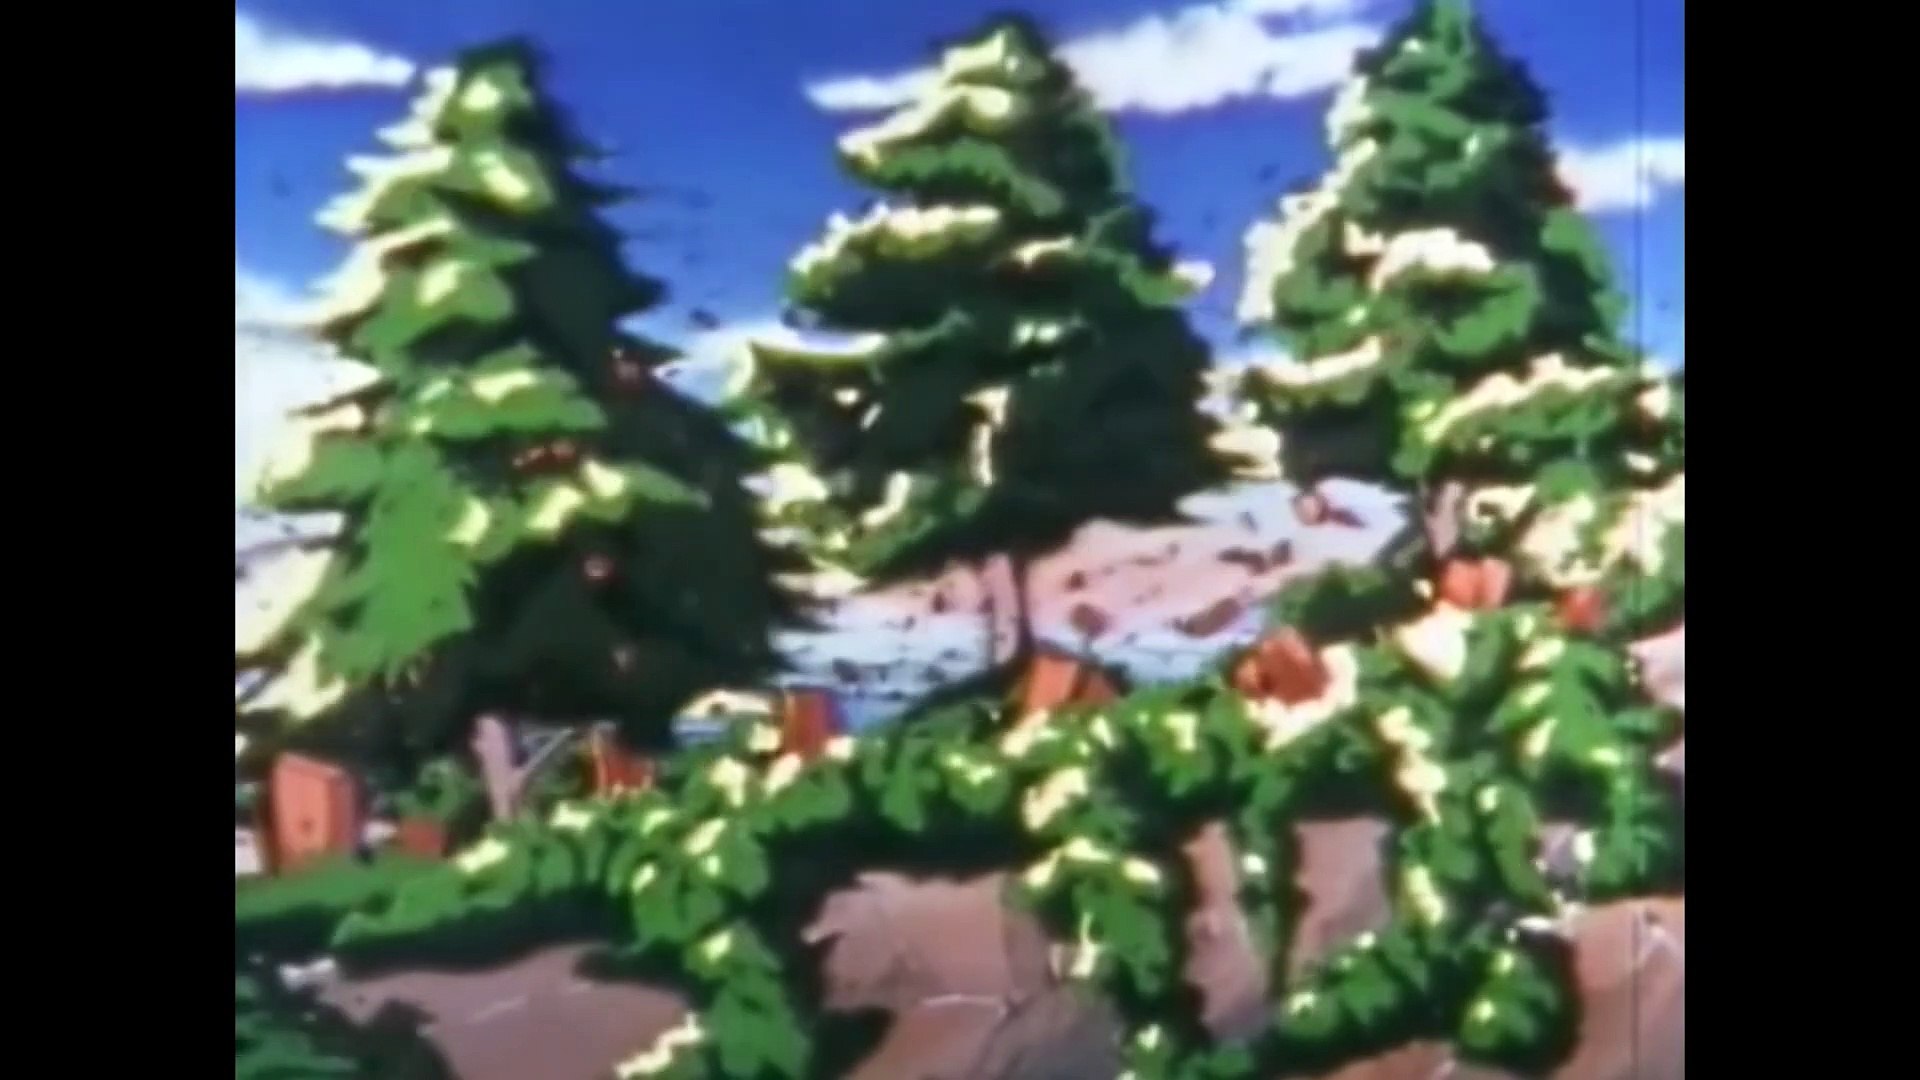 DAICON IV Opening Animation, movie, 1983